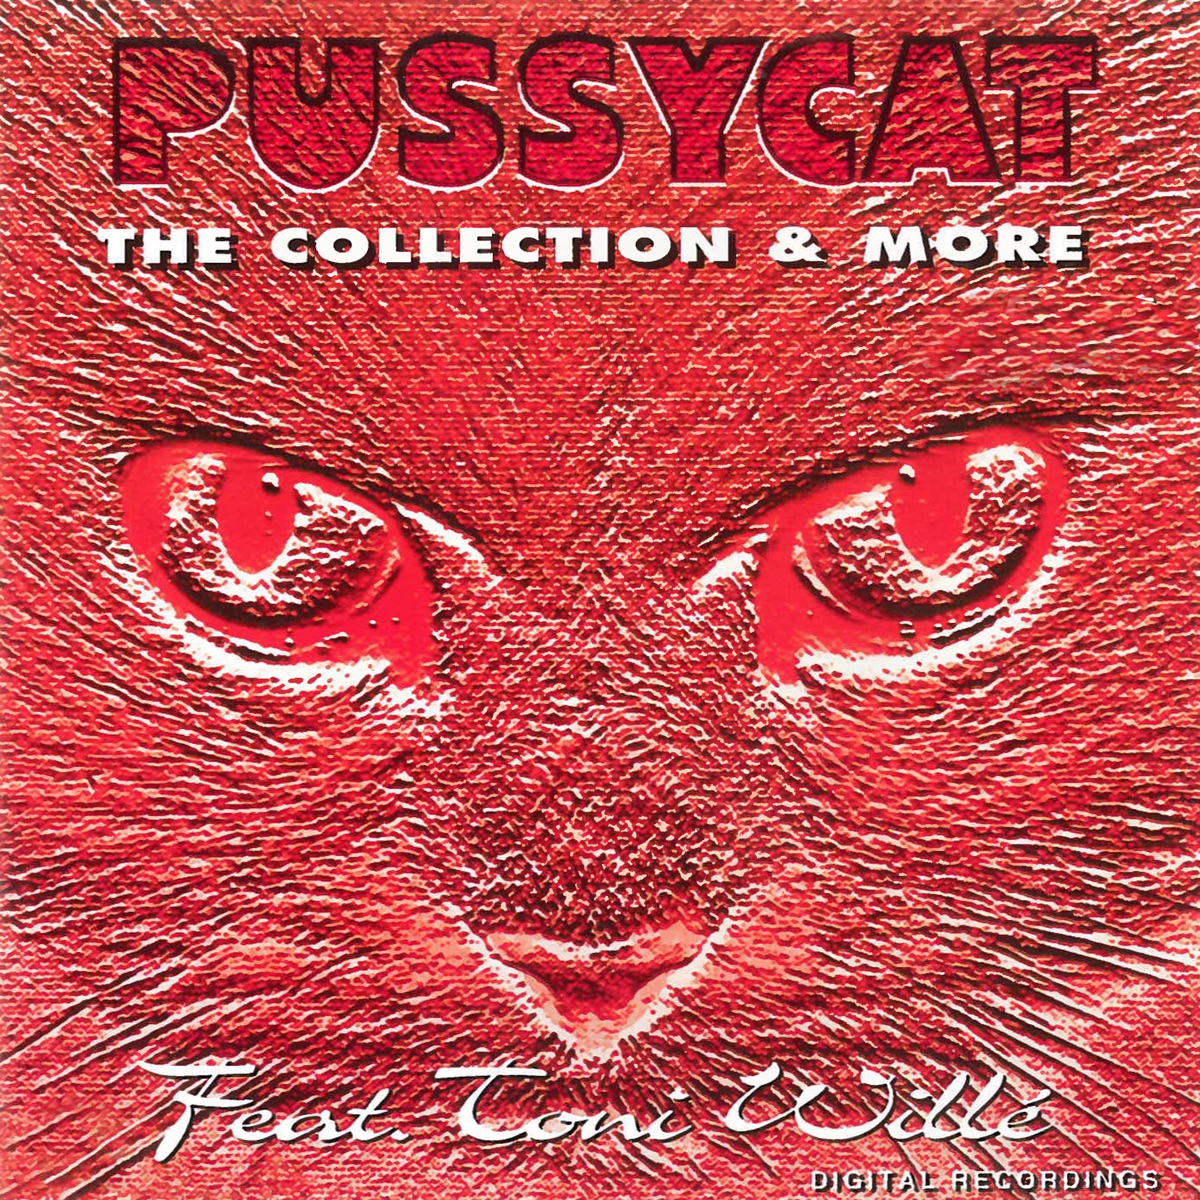 The Collection & More (feat. Toni Willé) - Album by Pussycat & Toni Willé -  Apple Music